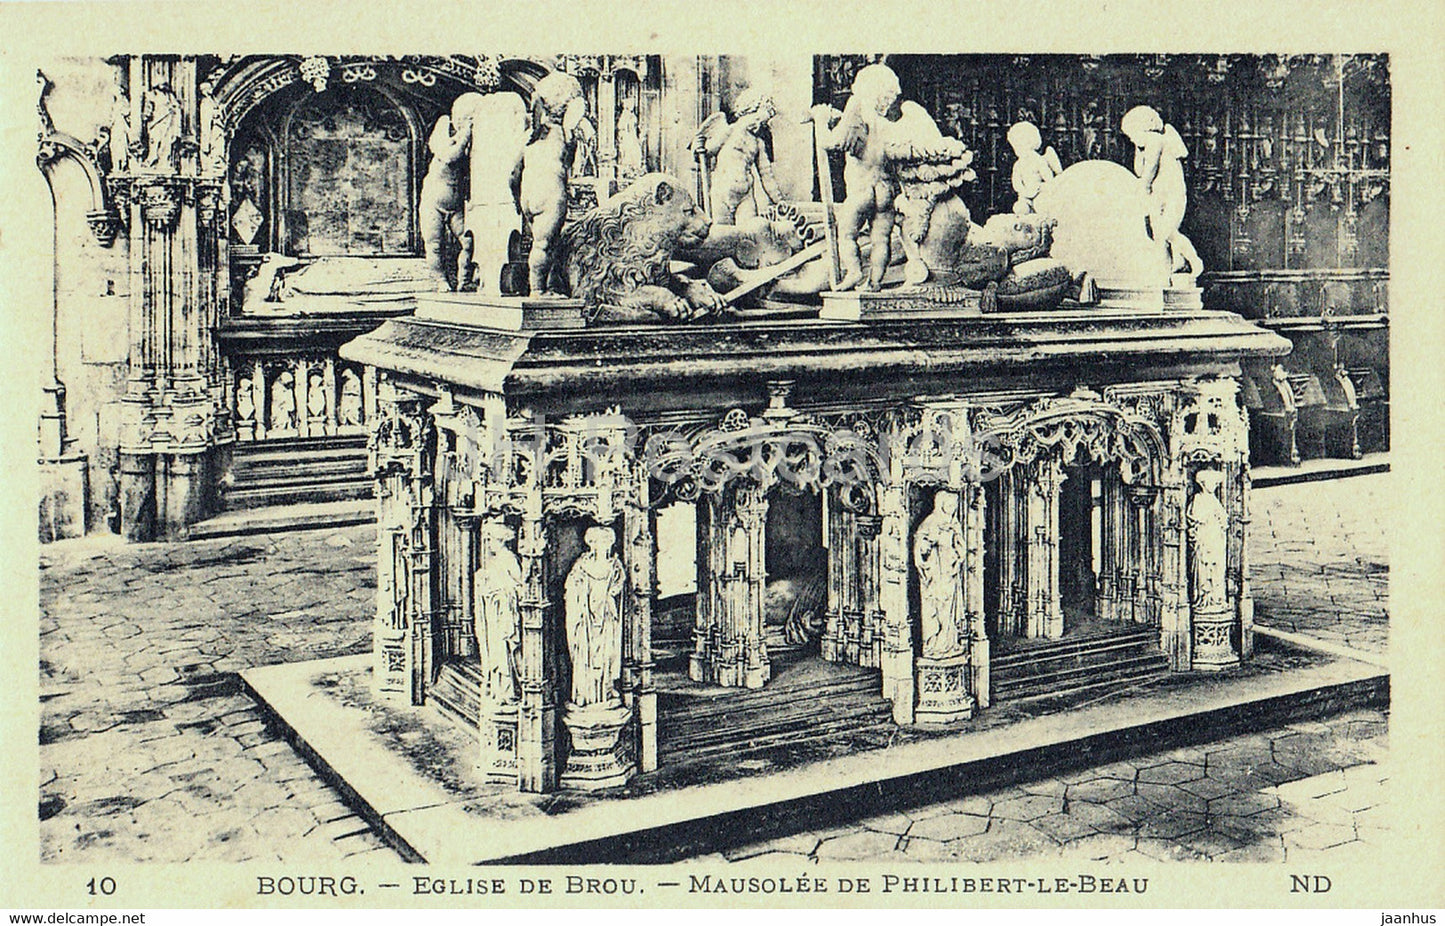 Bourg - Eglise de Brou - Mausolee de Philibert le Beau - church - 10 - old postcard - France - unused - JH Postcards